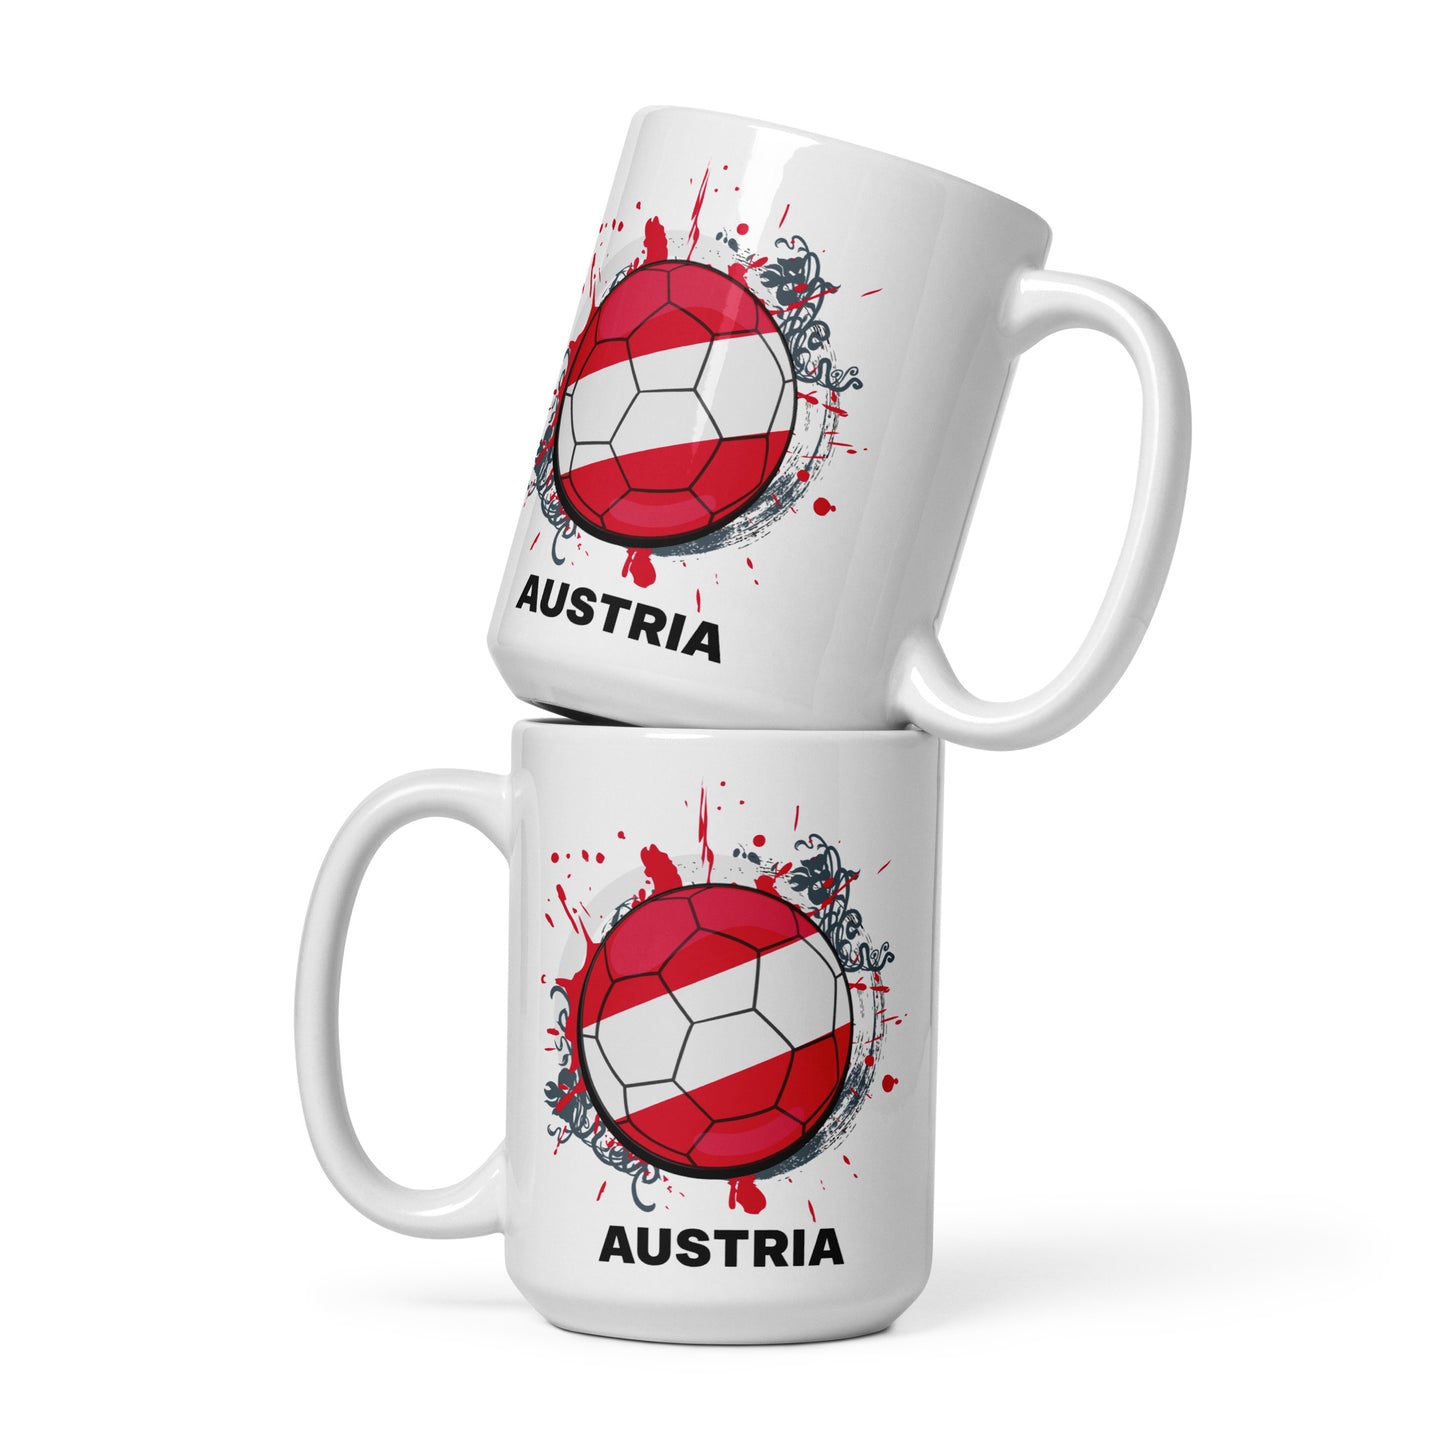 Austria Soccer - White glossy mug